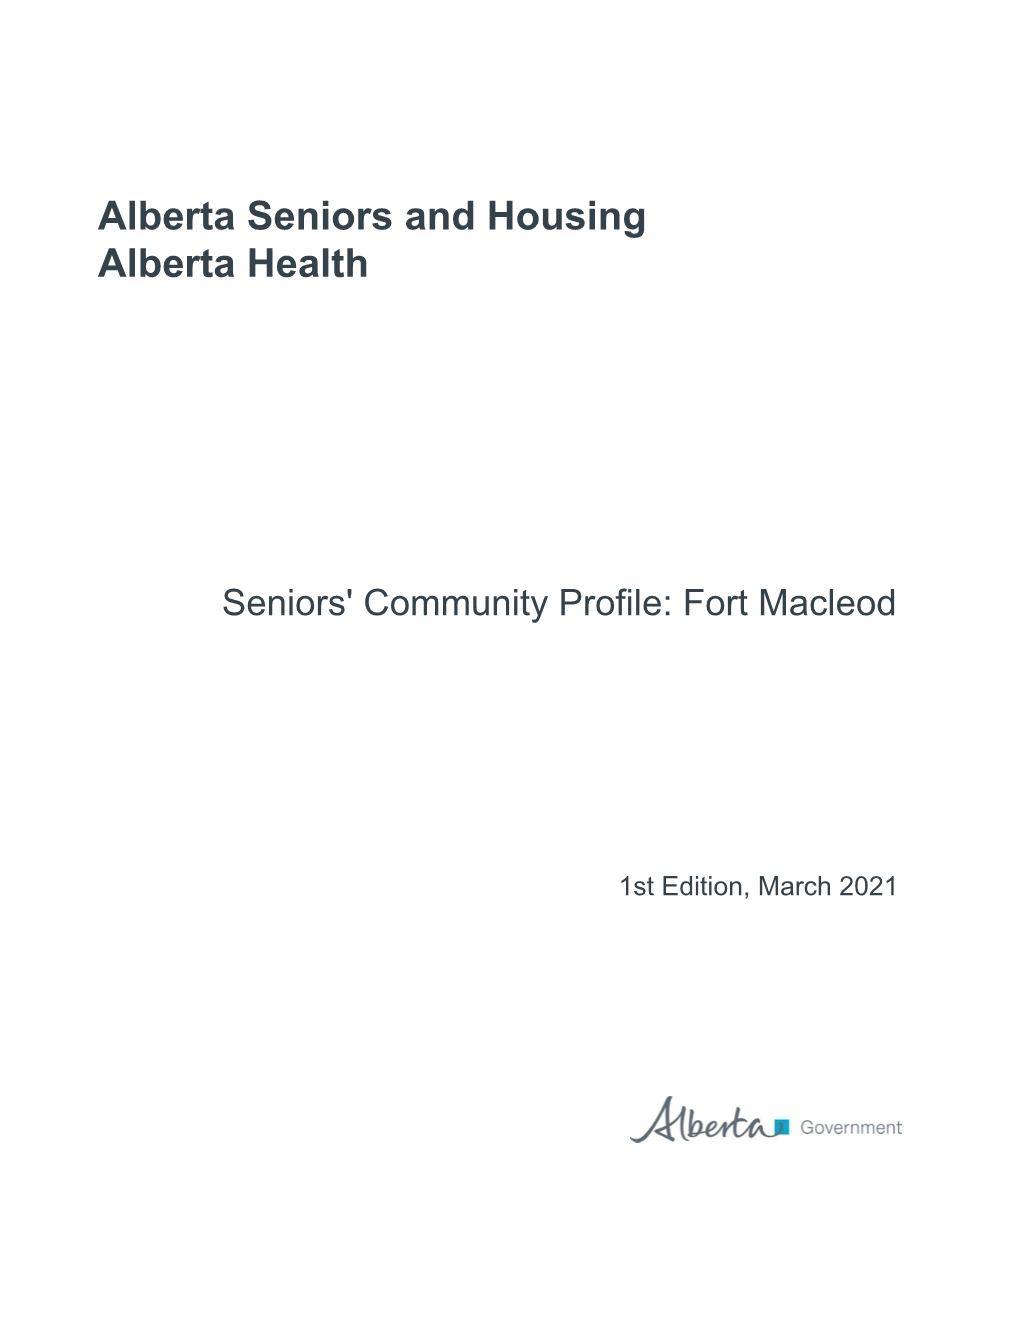 Seniors' Community Profile: Fort Macleod